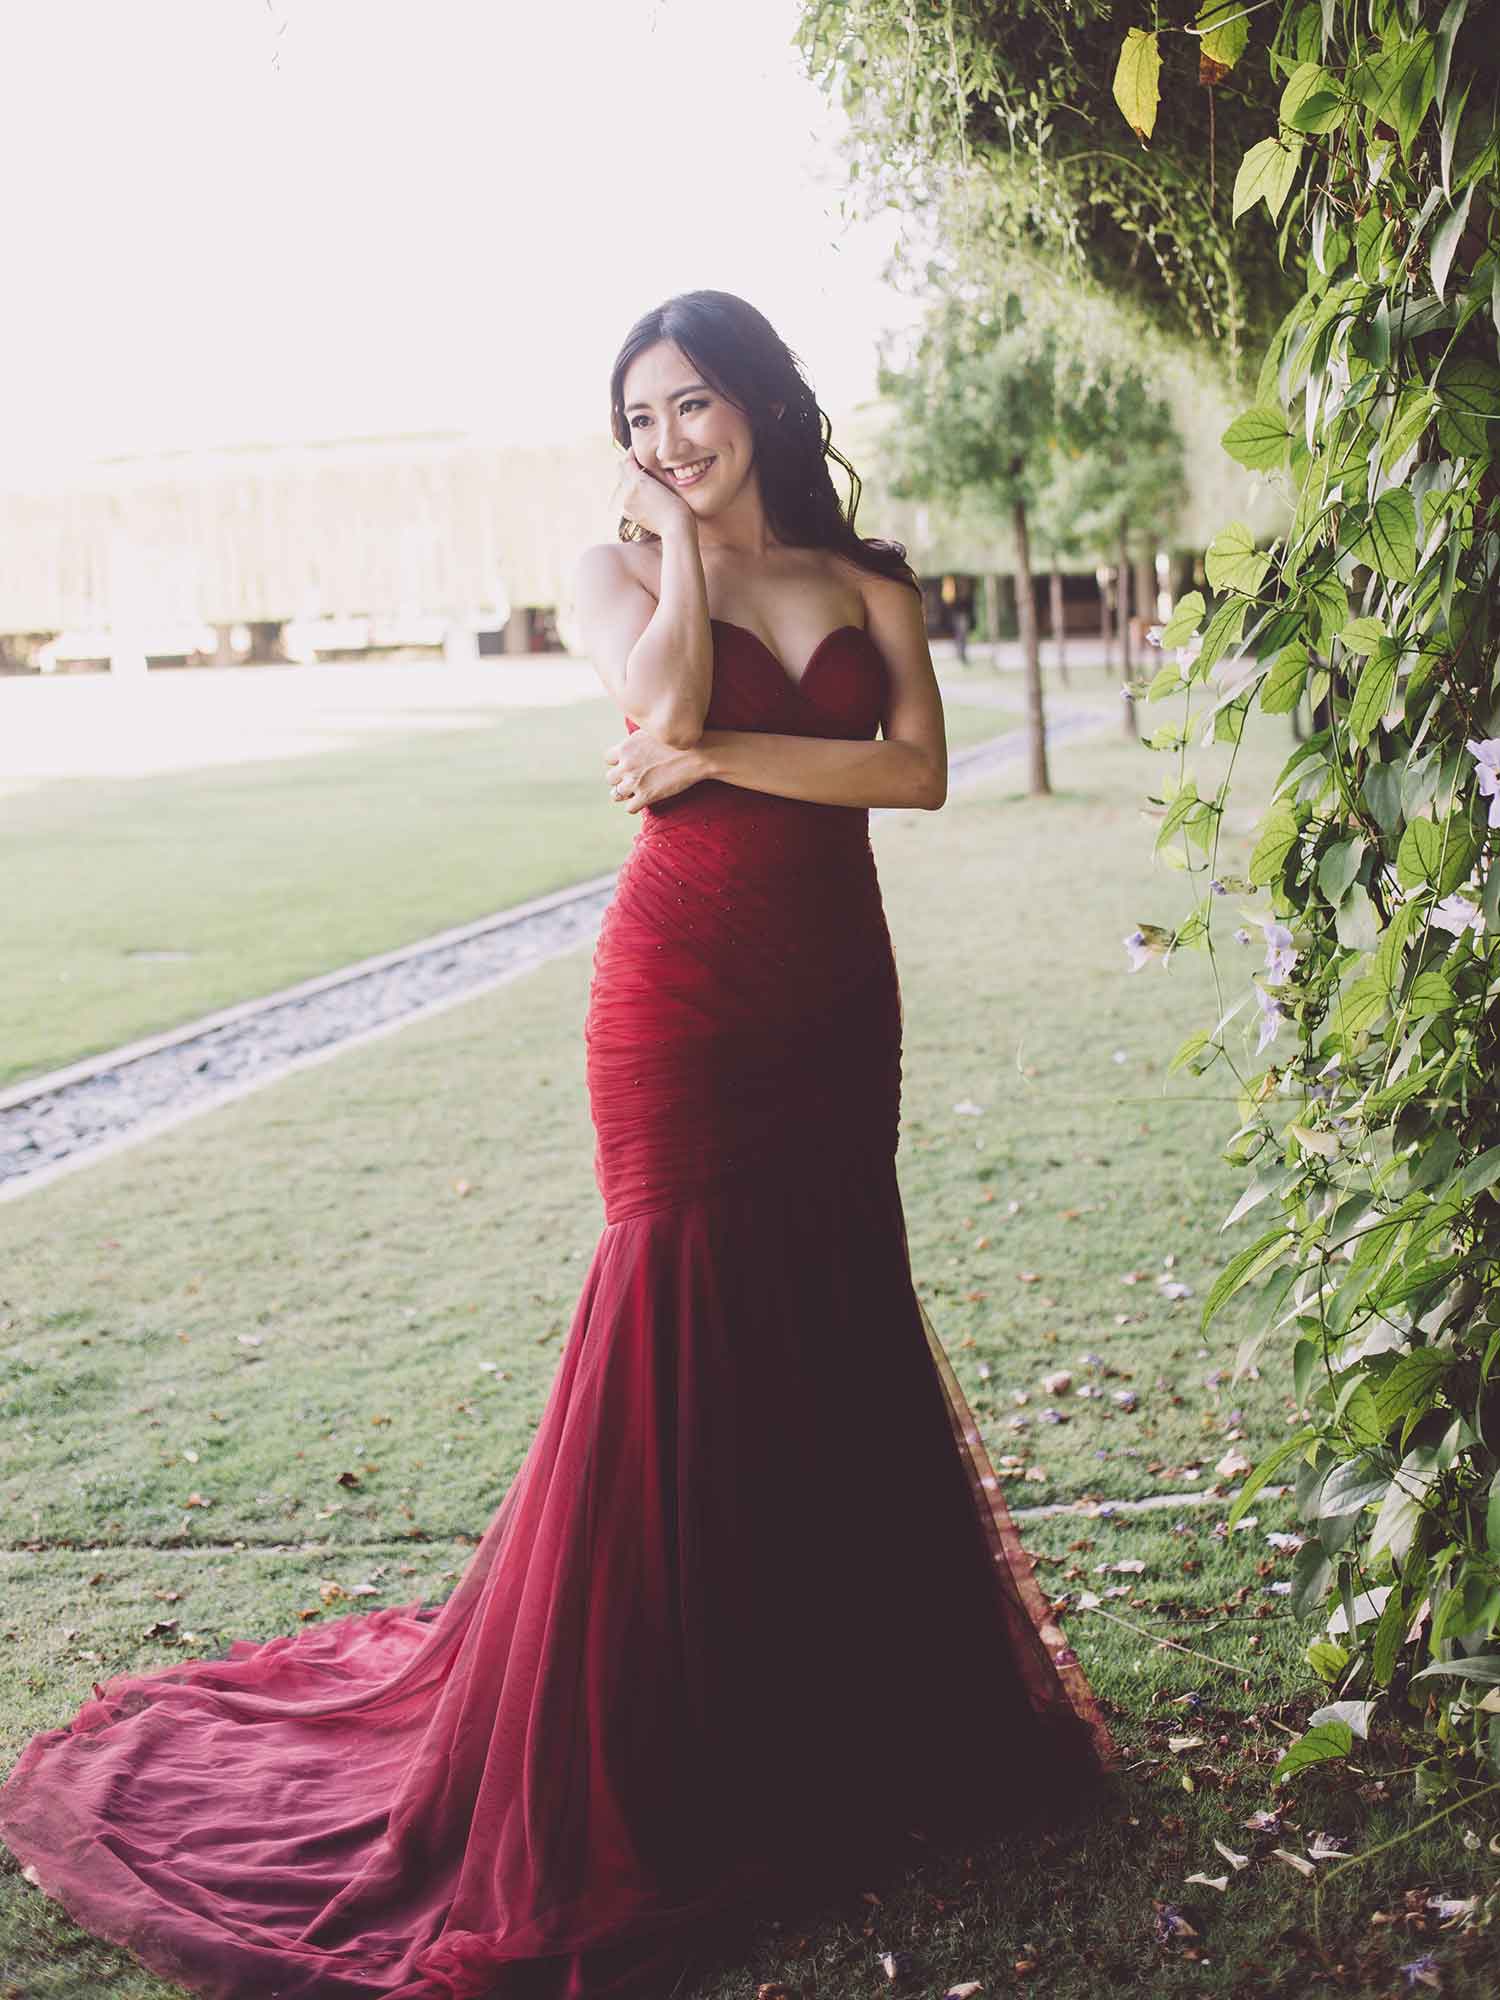 red elegant dress